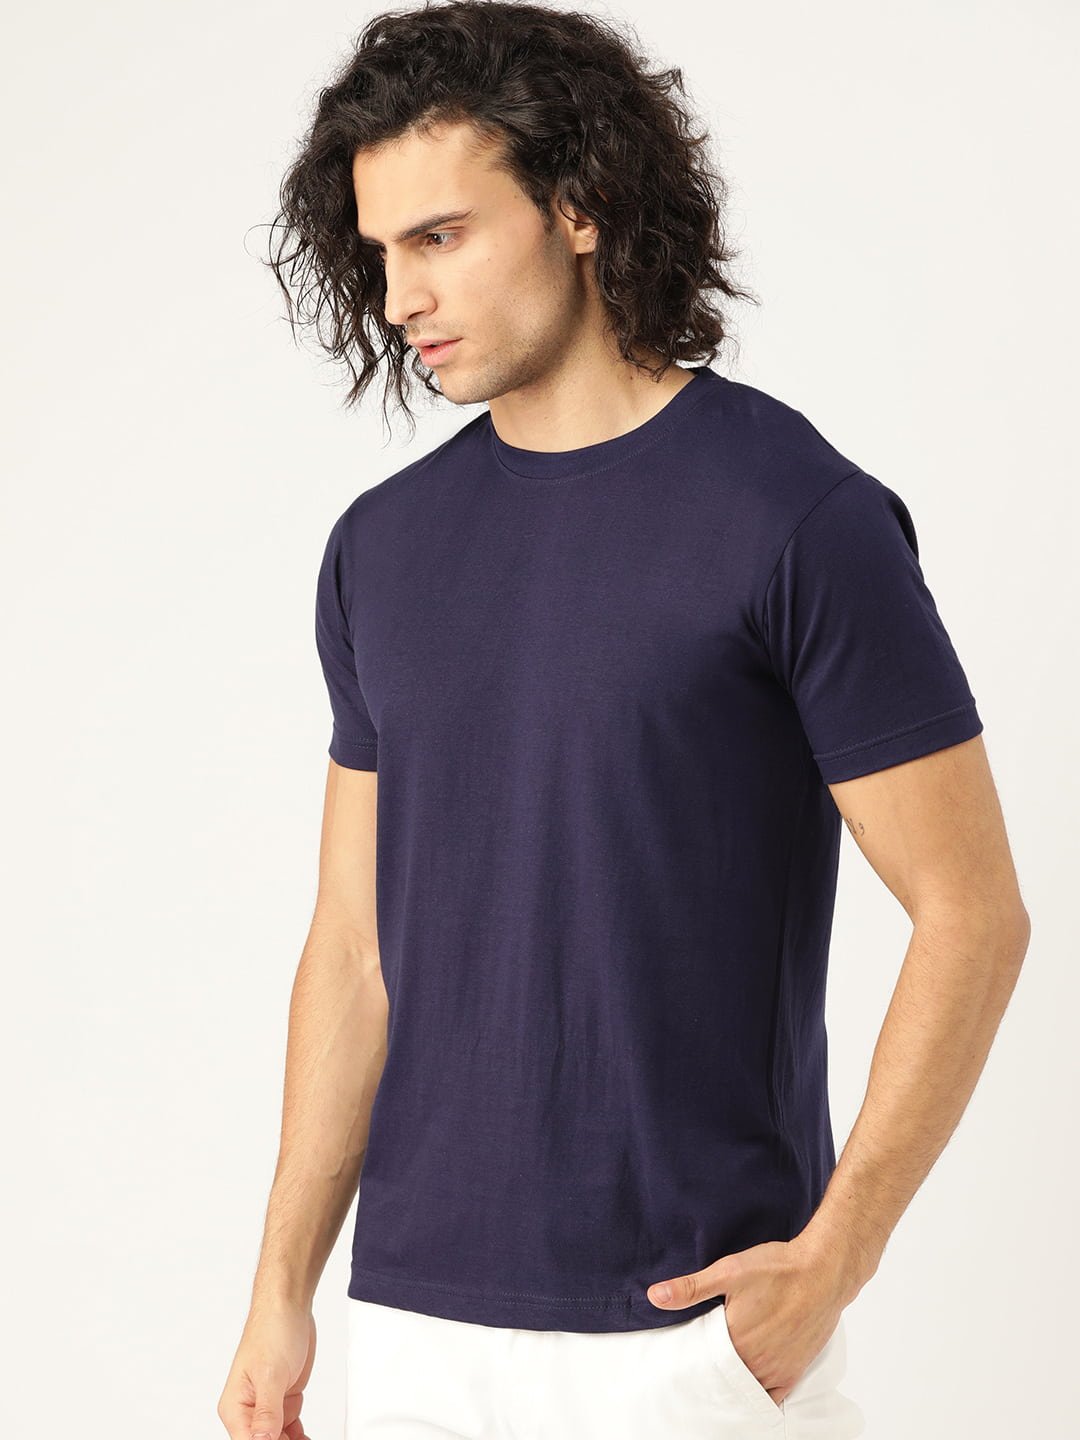 Hinglish Men's Navy Blue Round Neck  T-Shirt